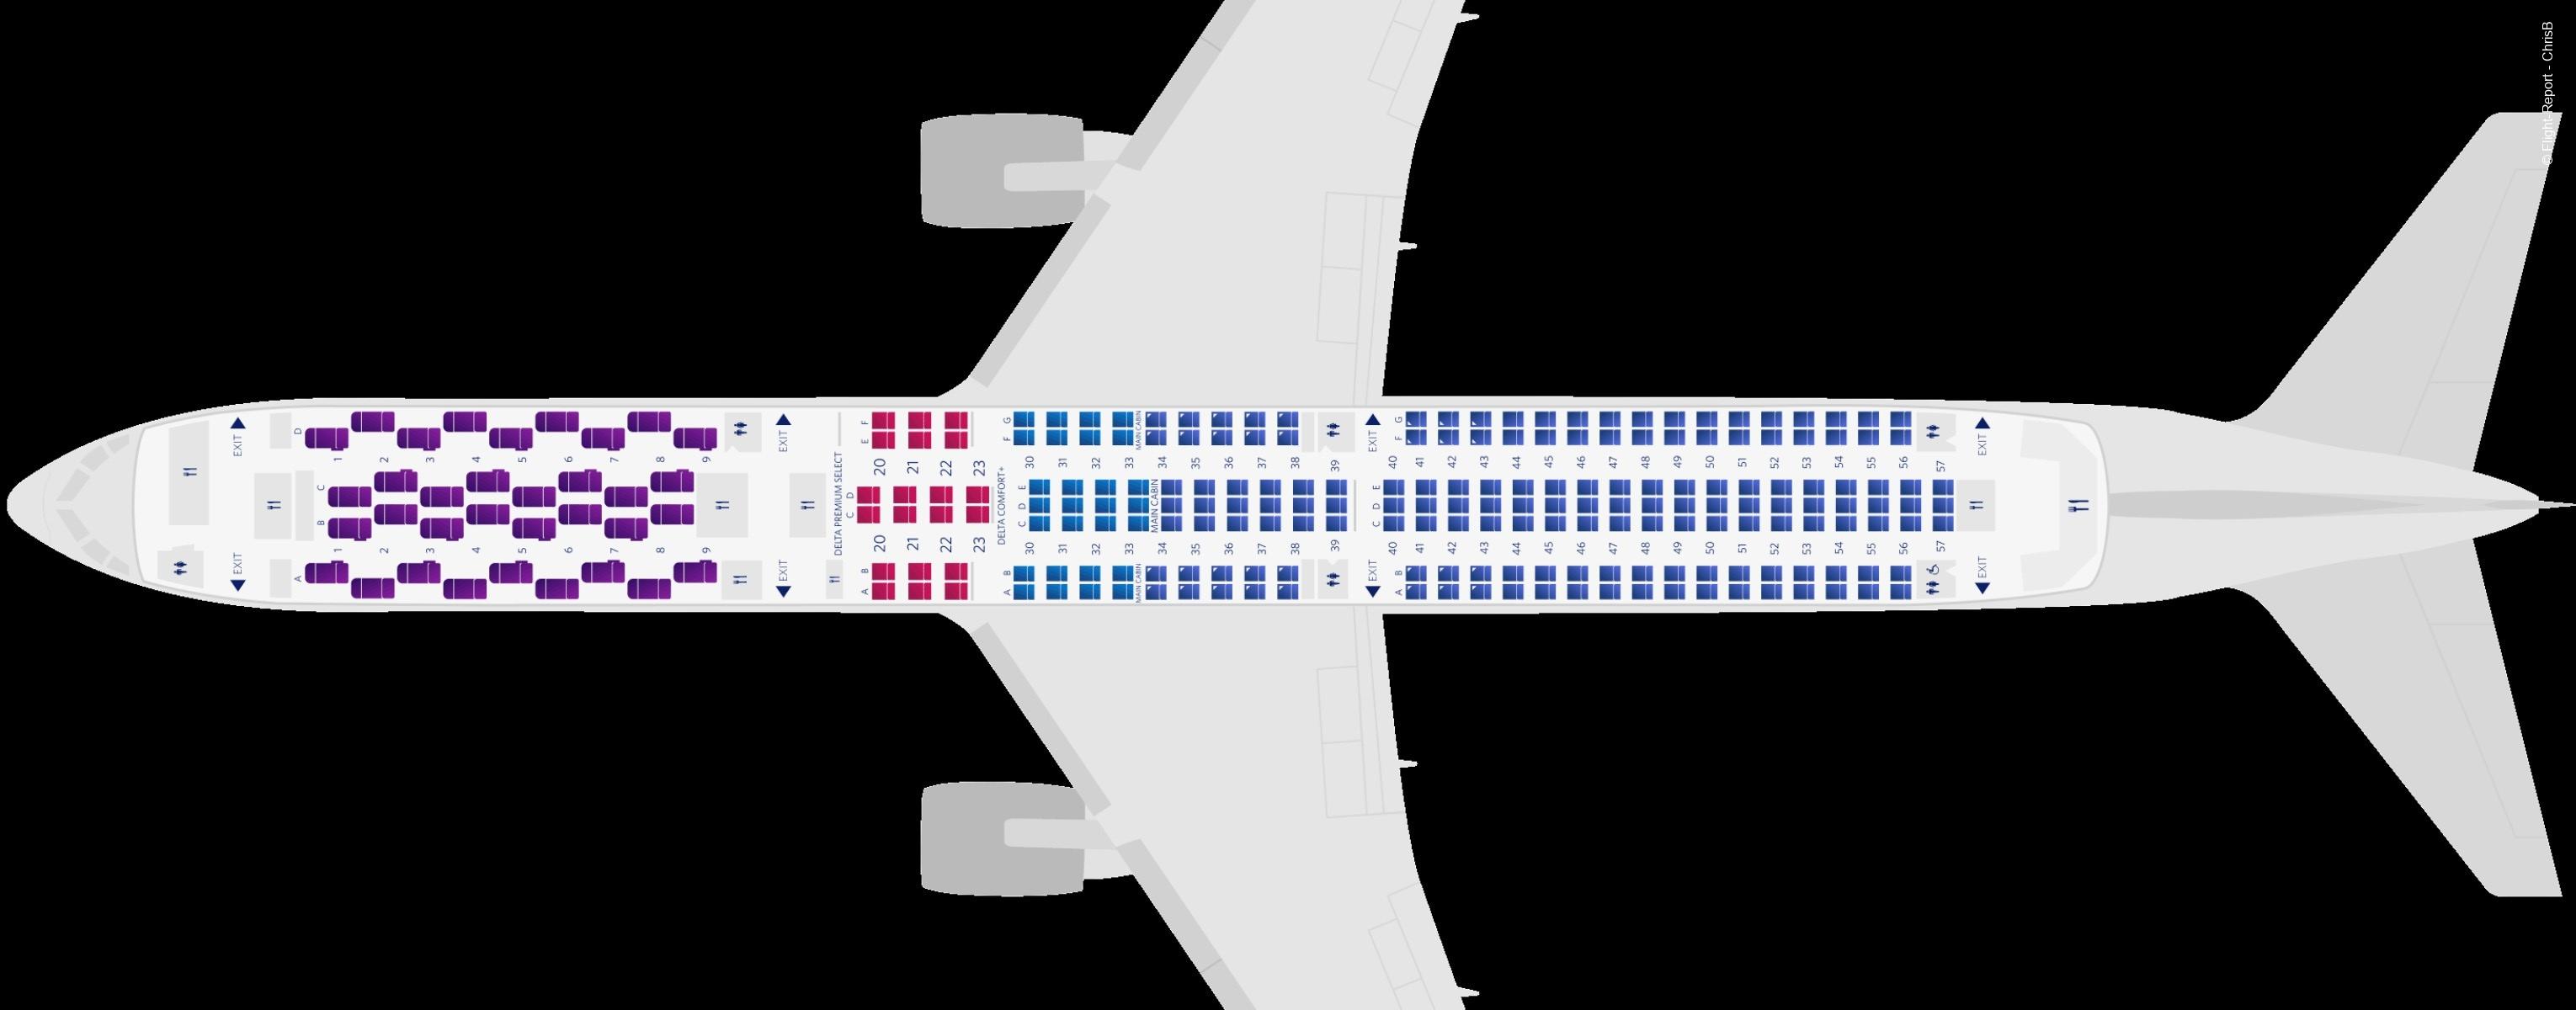 photo 767-400er-764-seat-map-static-desktop-53278